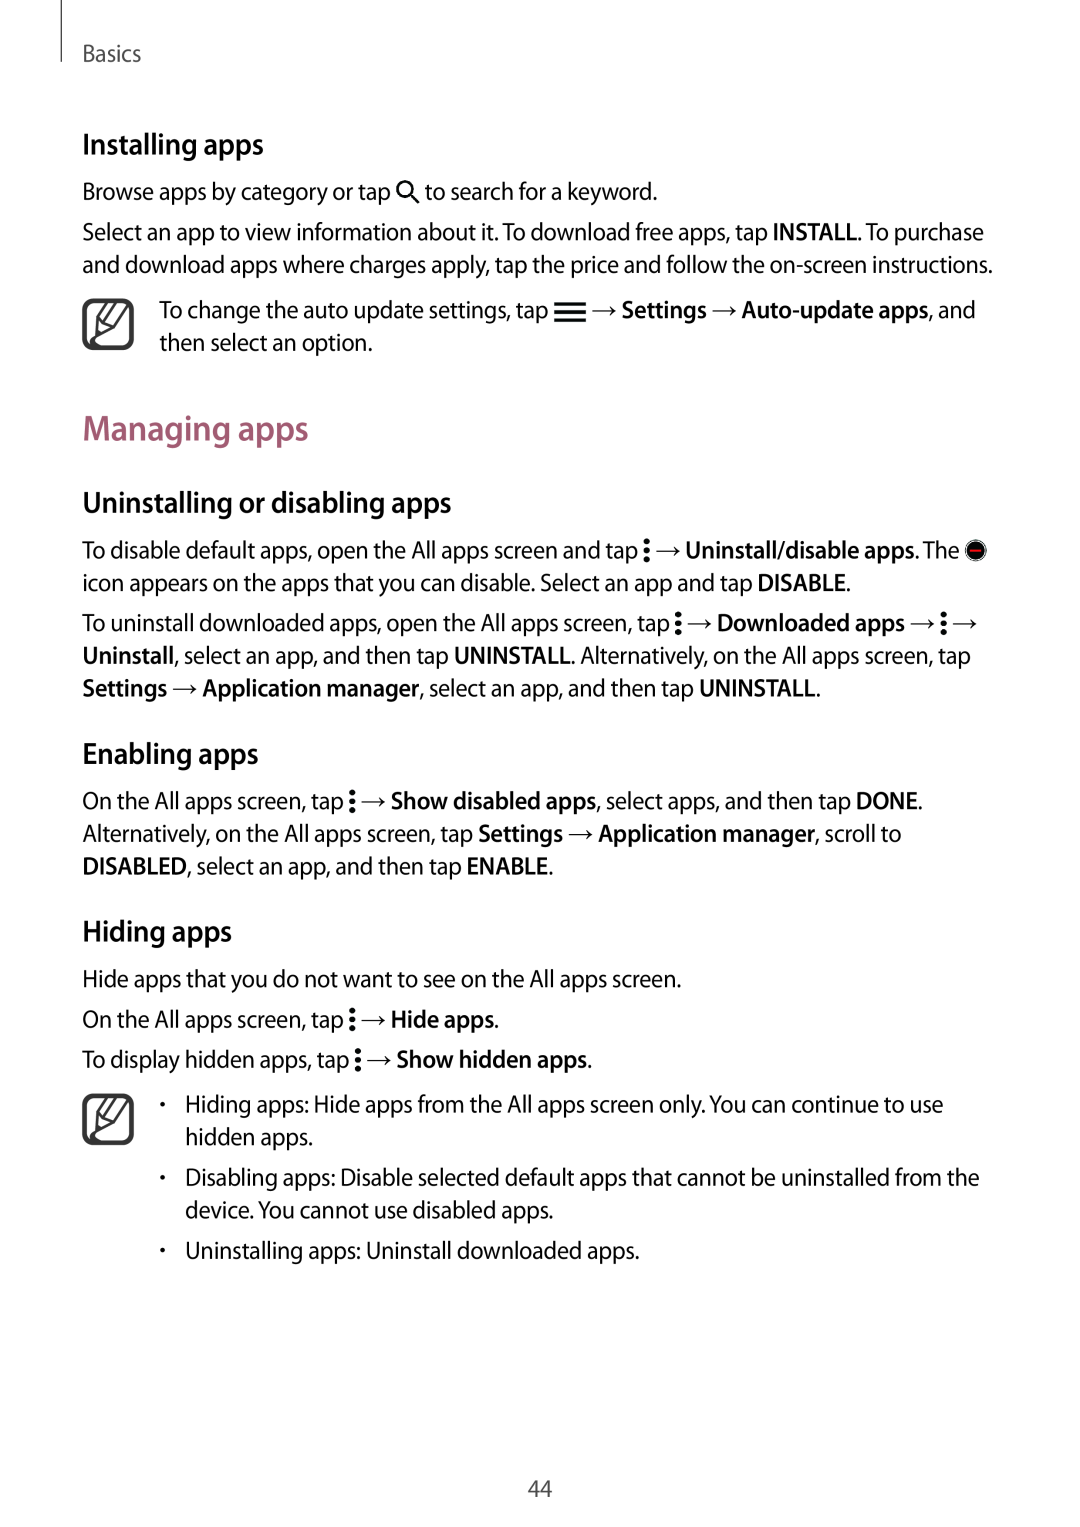 Samsung SM-N915FZKYXEO Managing apps, Uninstalling or disabling apps, Enabling apps, Hiding apps, Installing apps, Basics 